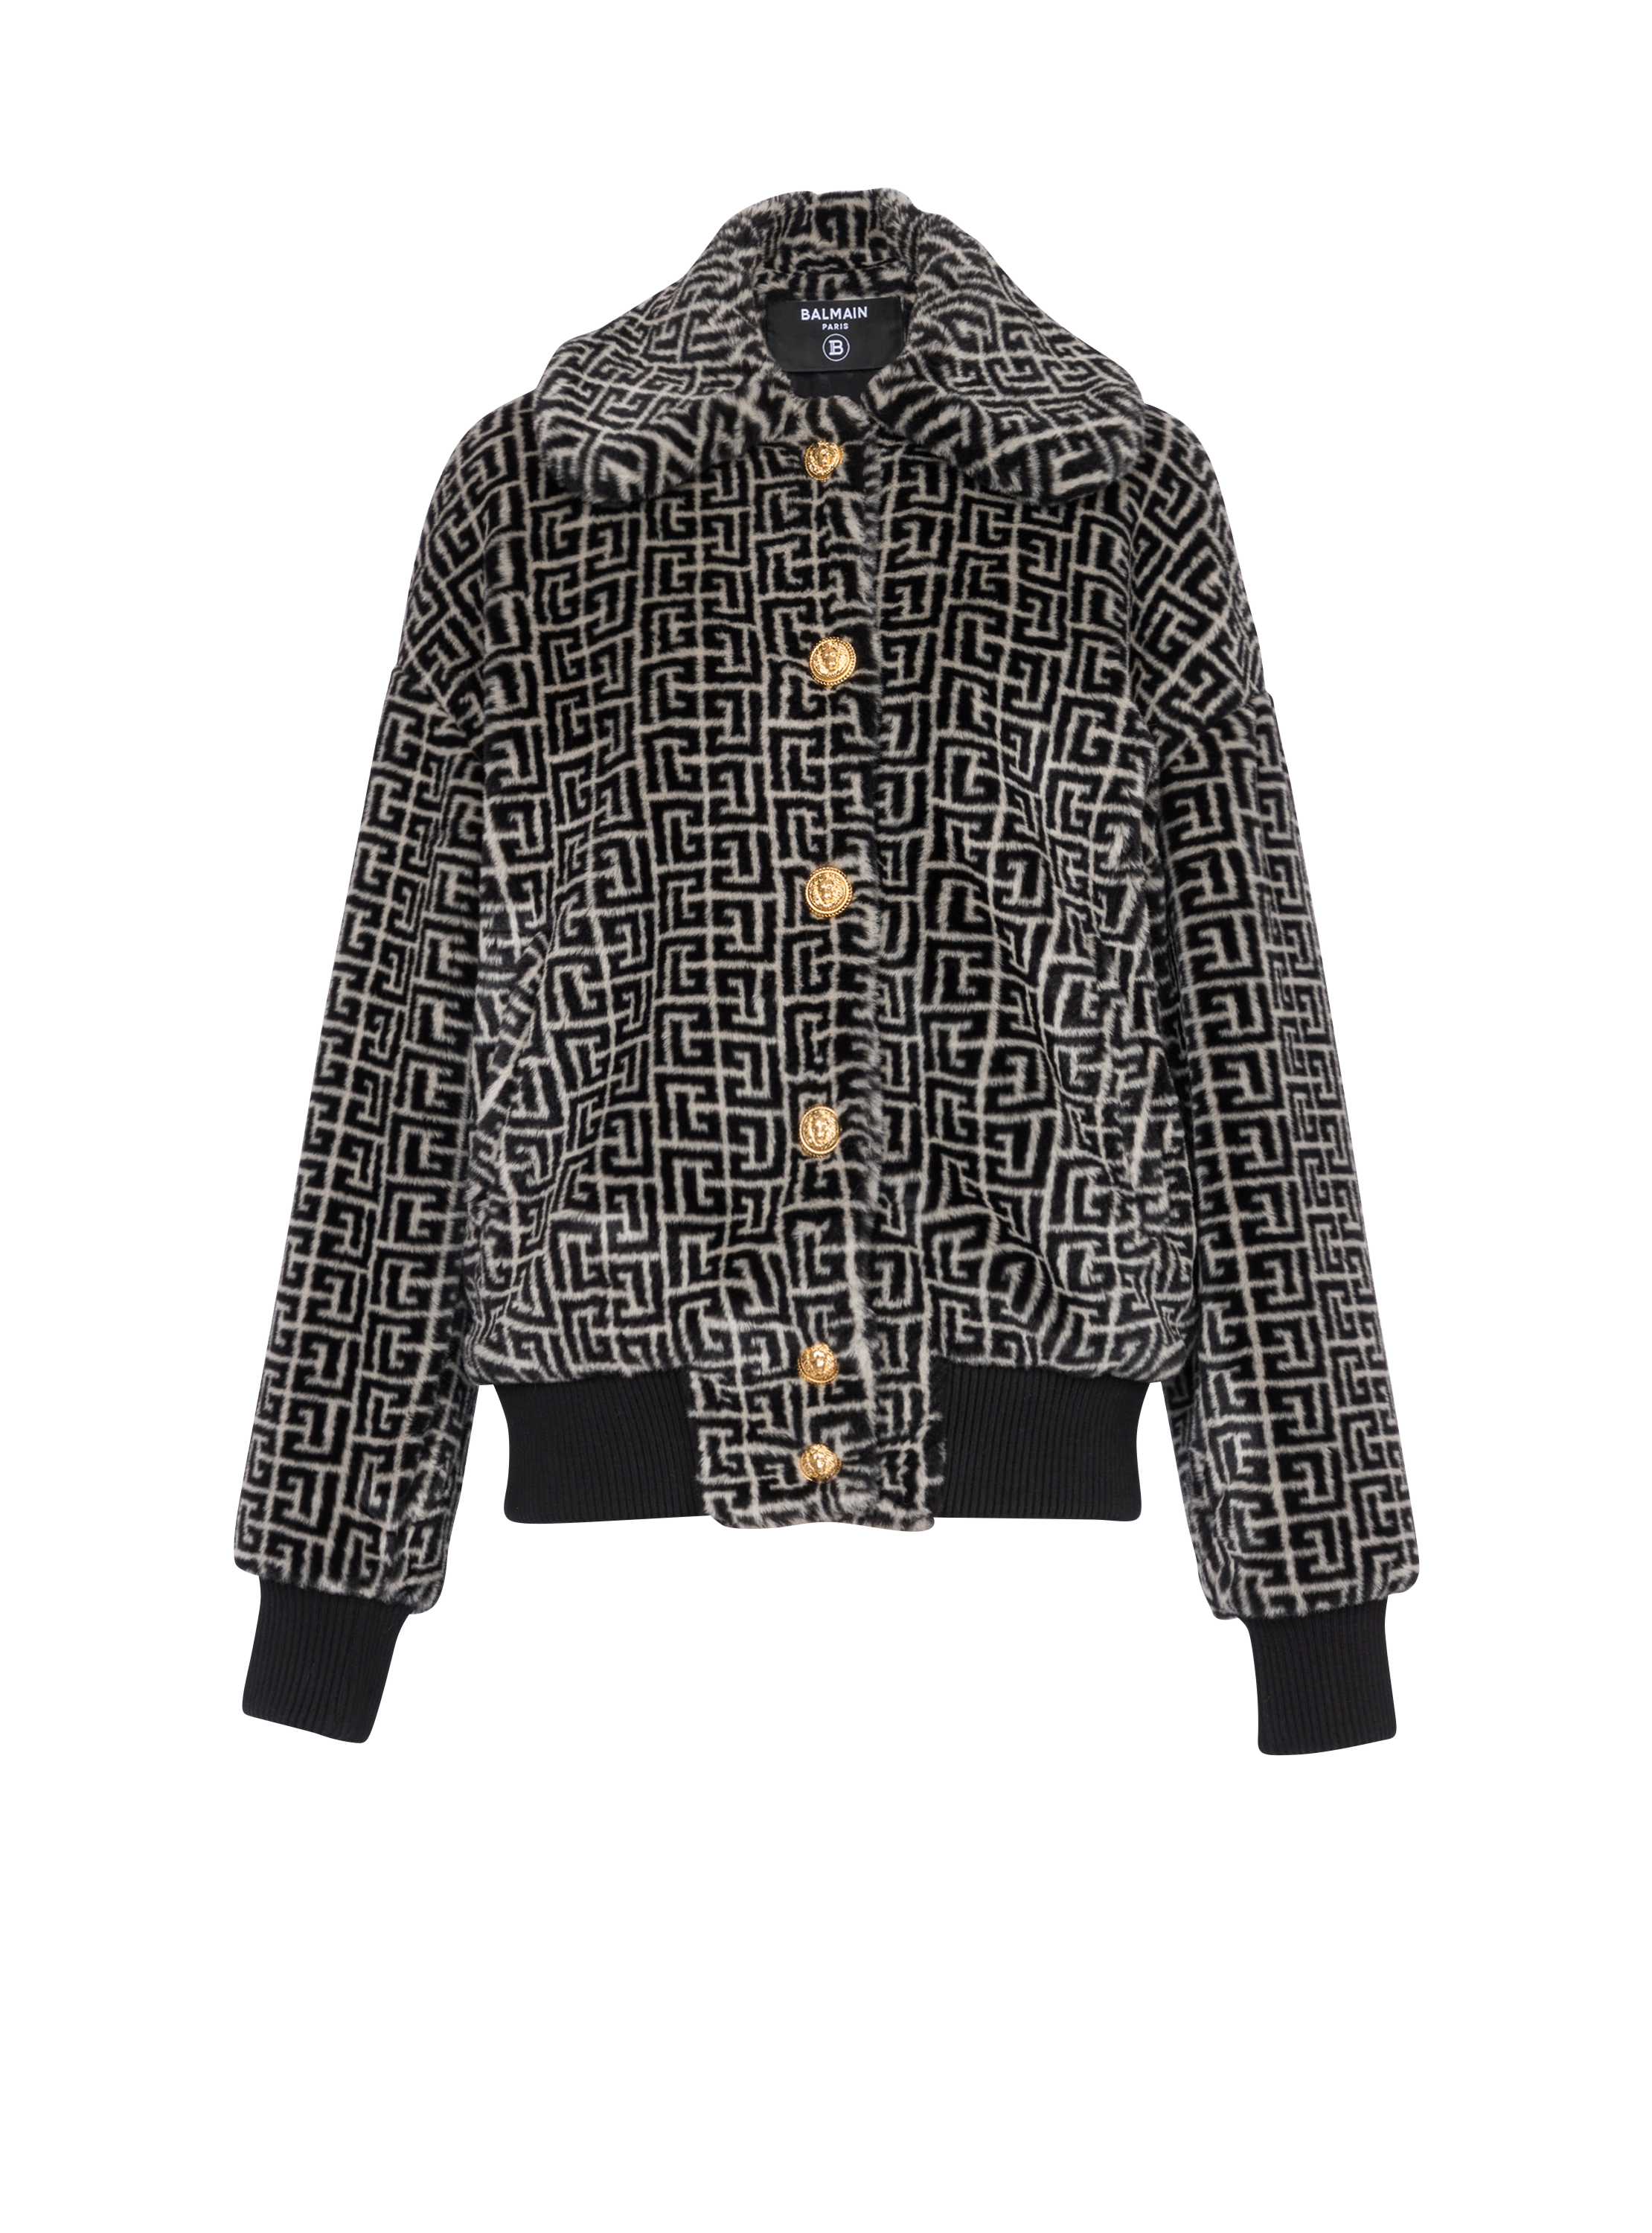 Wool jacket with monogram patterns, black, hi-res